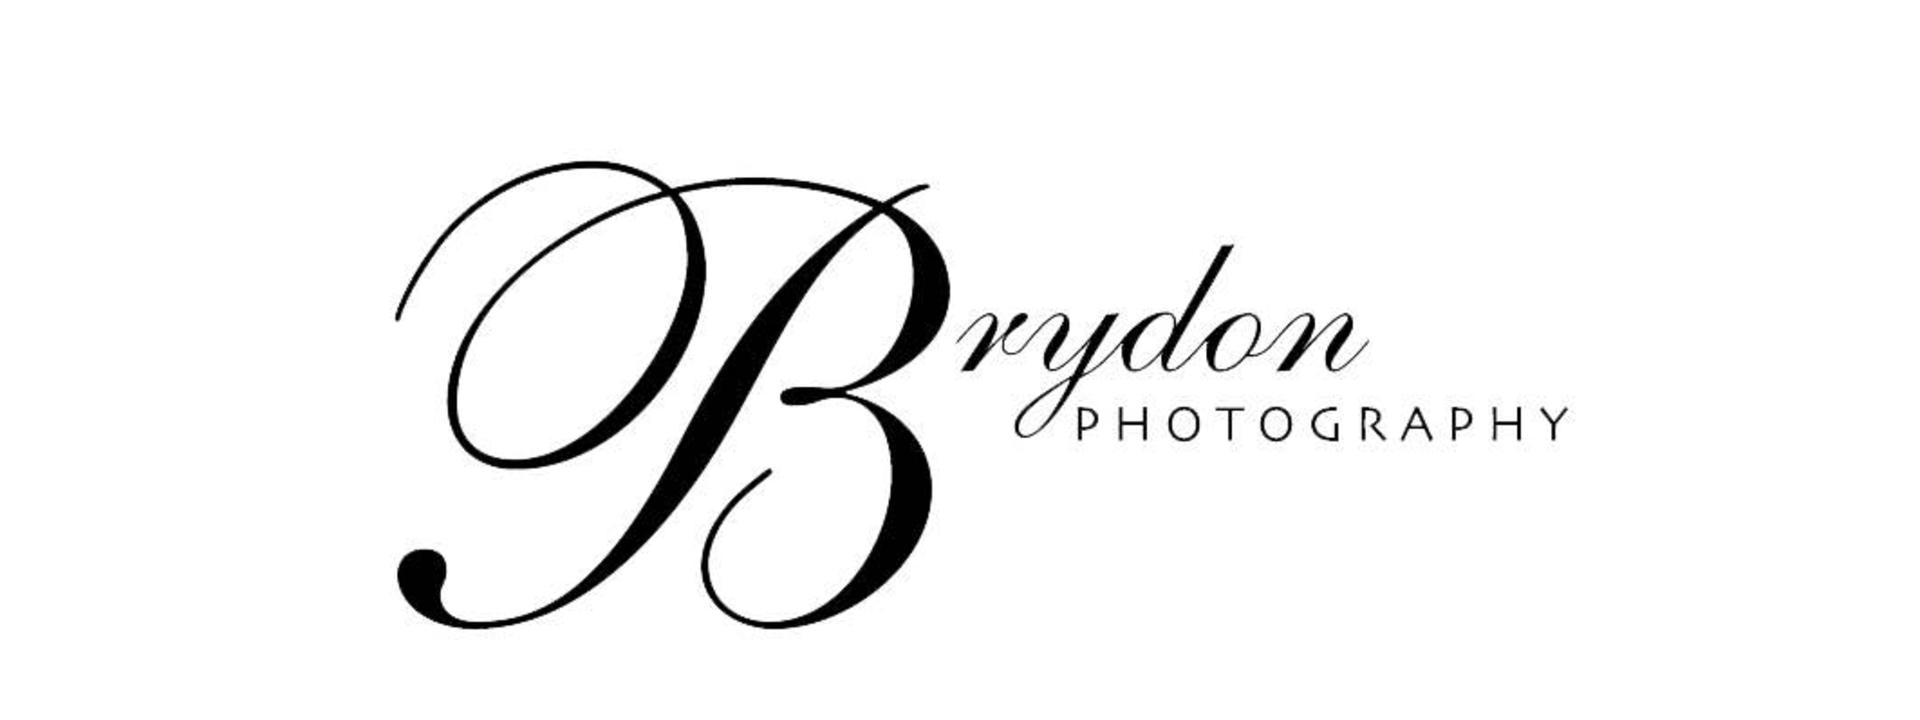 Brydon_photography_logo (1).jpg